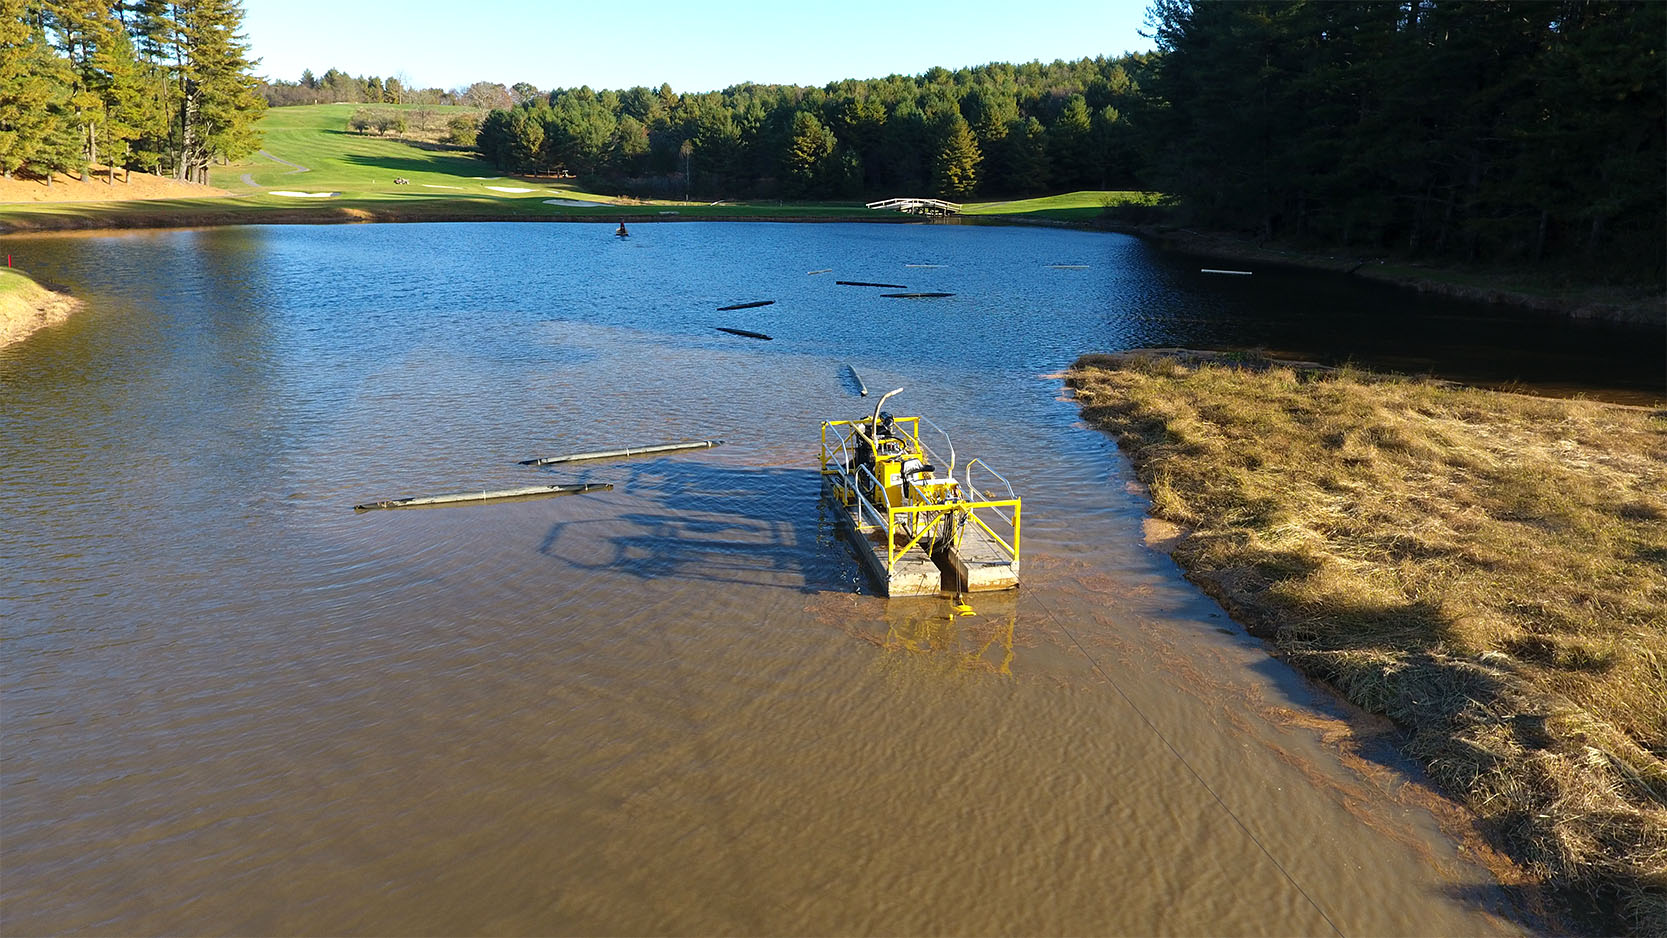 pond dredge equipment kentucky